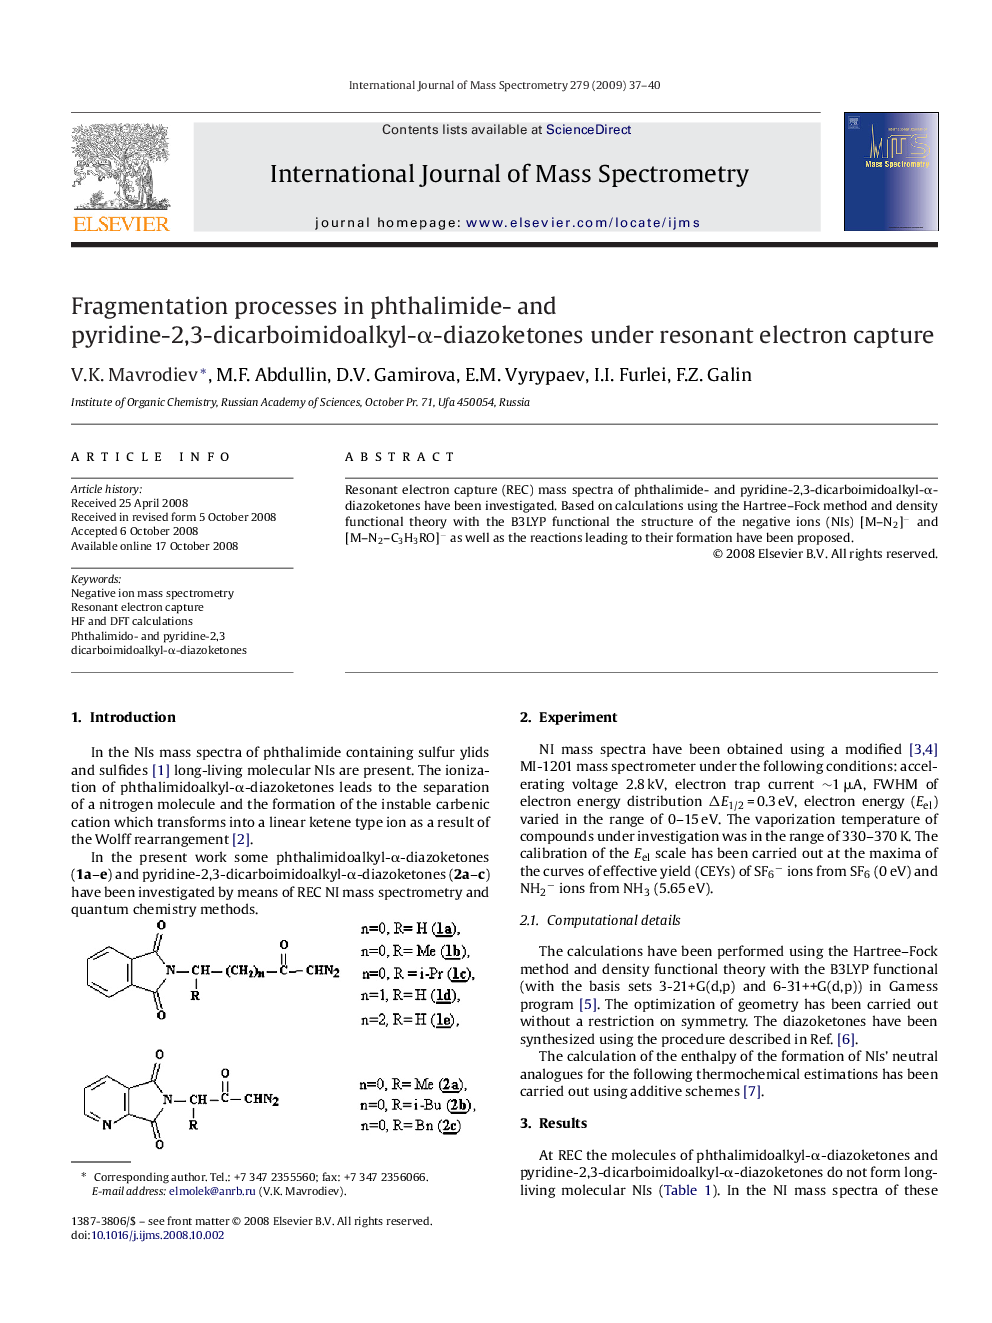 Fragmentation processes in phthalimide- and pyridine-2,3-dicarboimidoalkyl-α-diazoketones under resonant electron capture